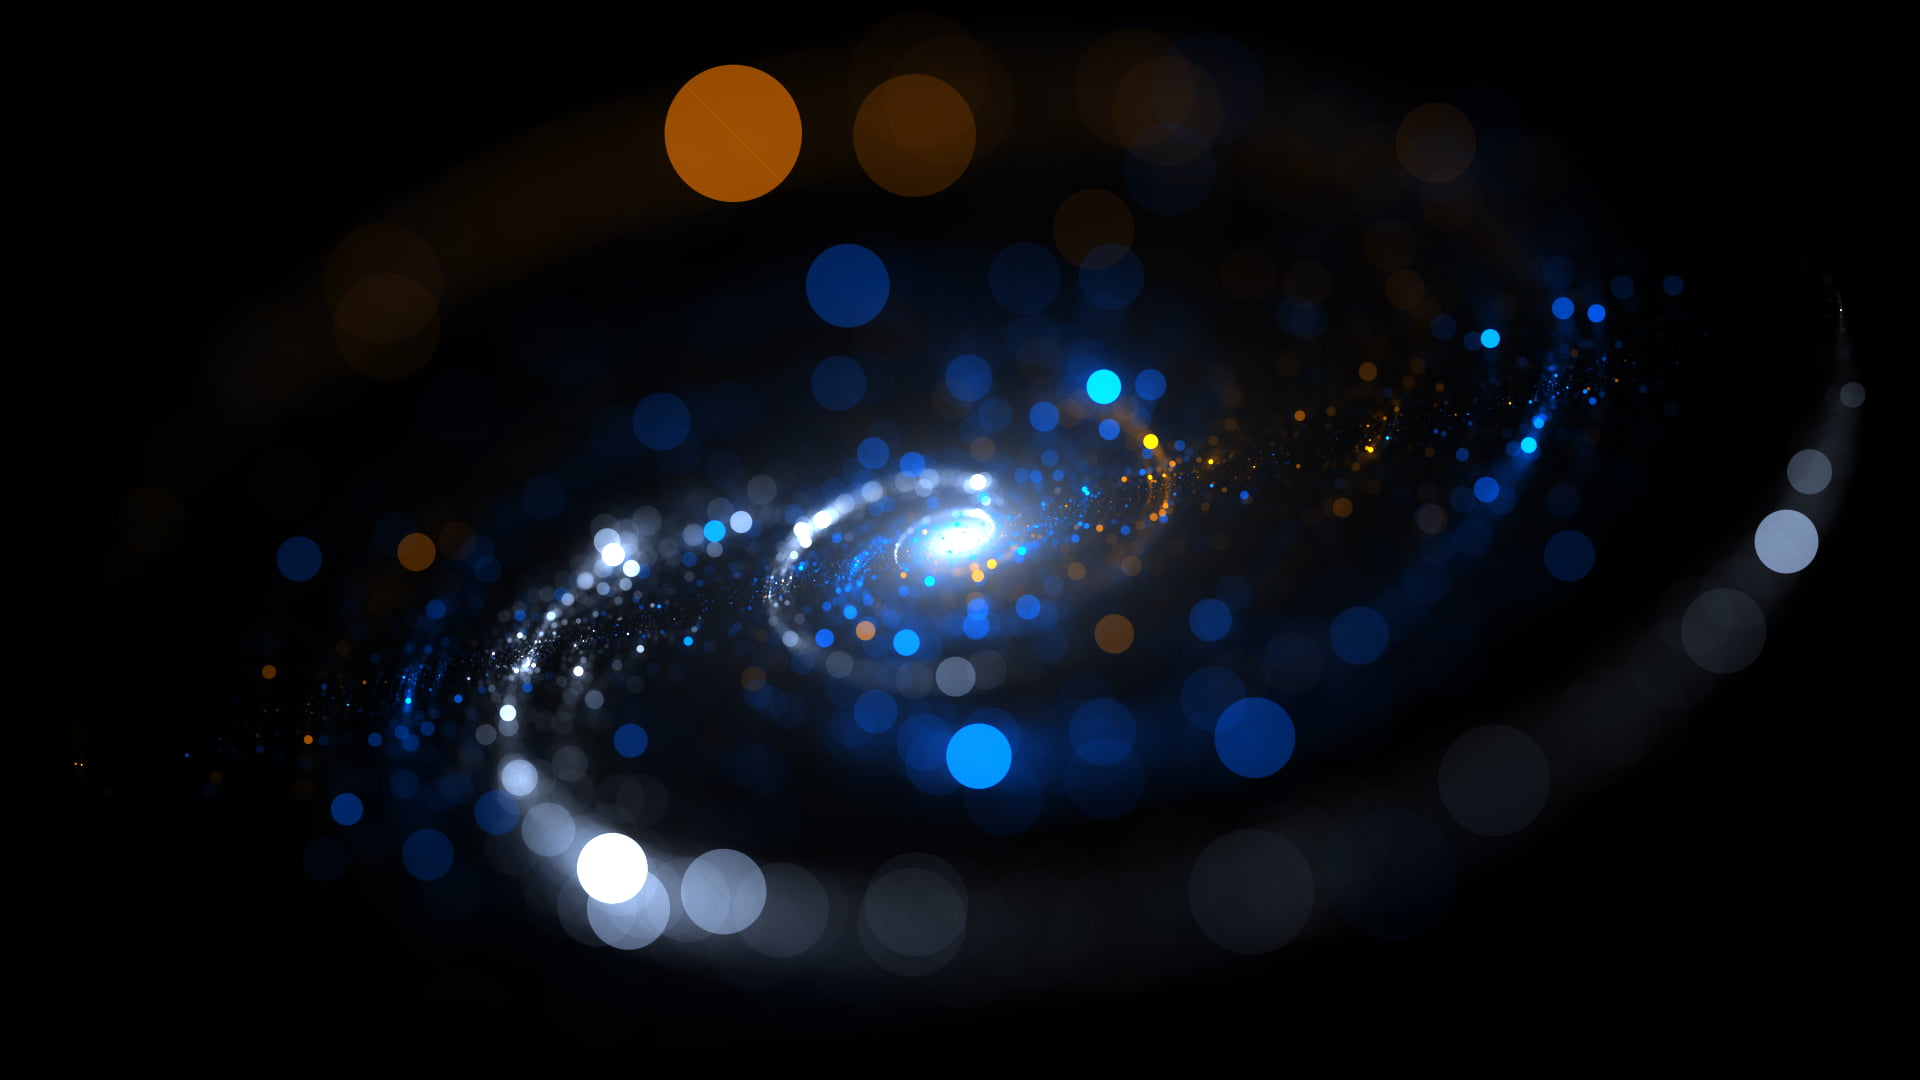 galaxy digital wallpaper, blue and orange bokeh photography, spiral galaxy